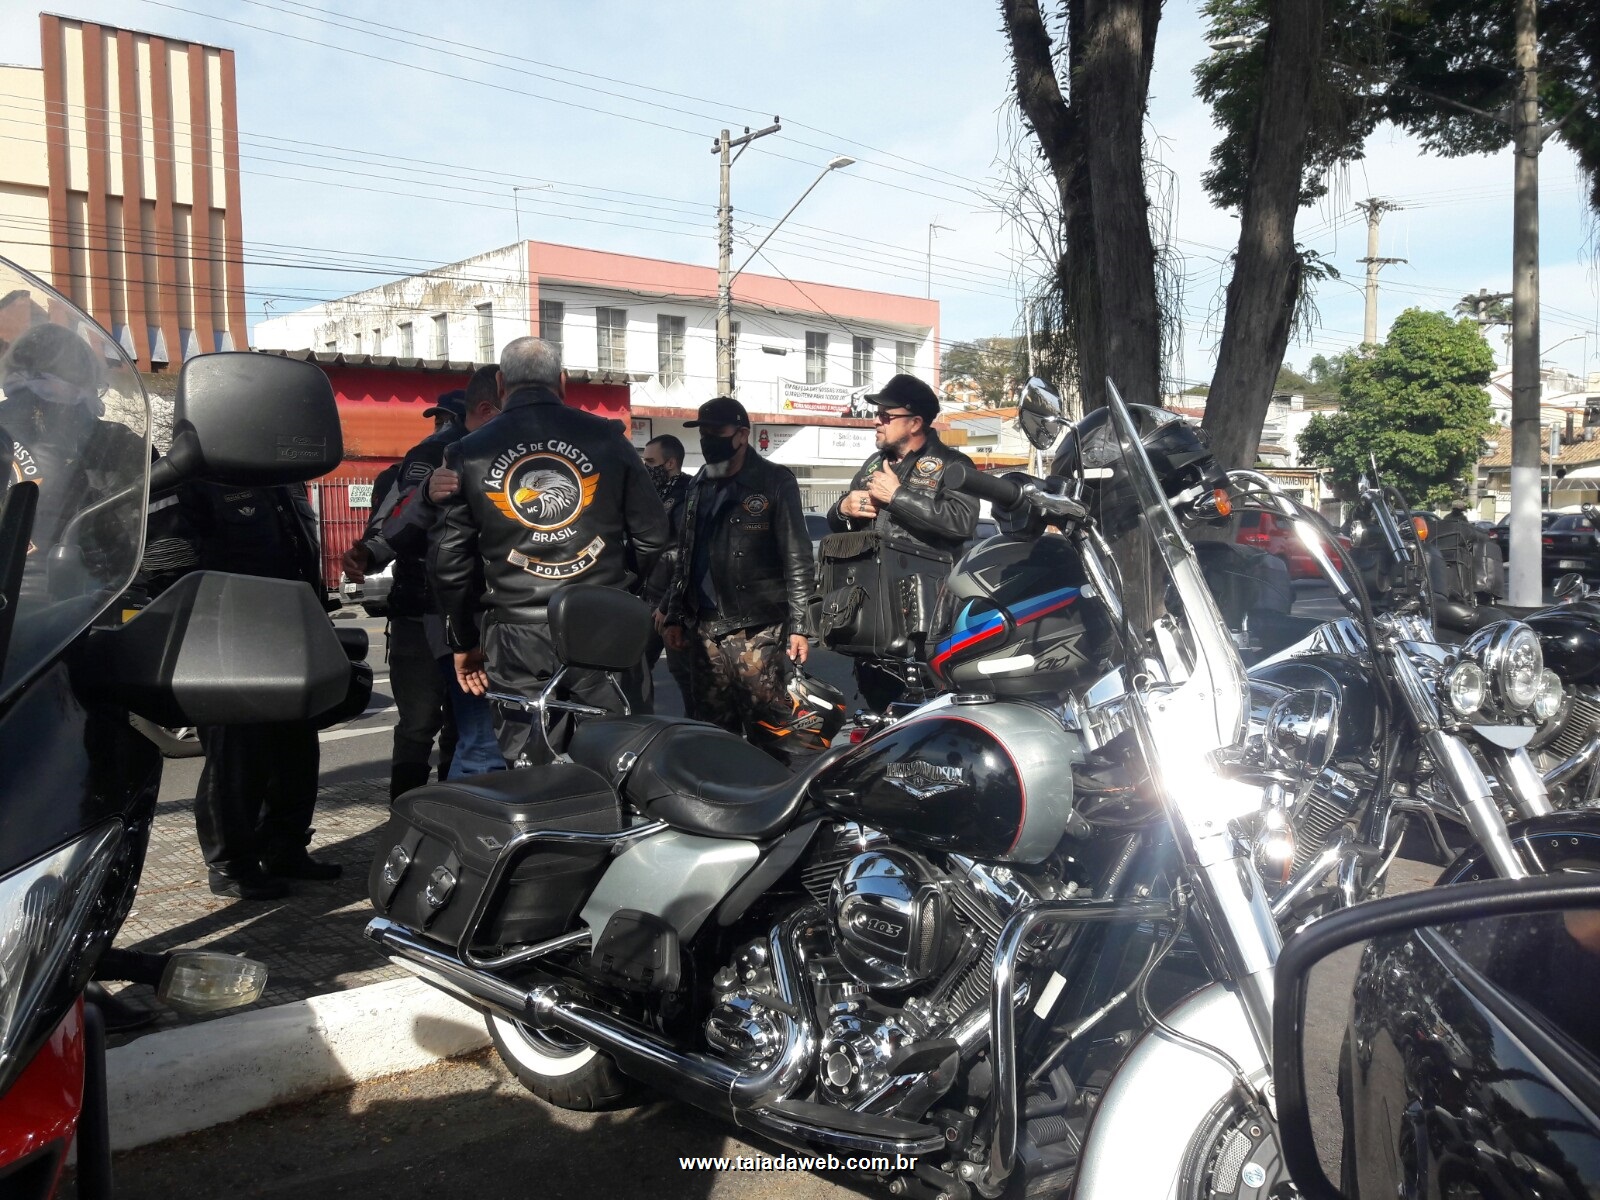 Moto Clube Aguias do Sul - Brazil